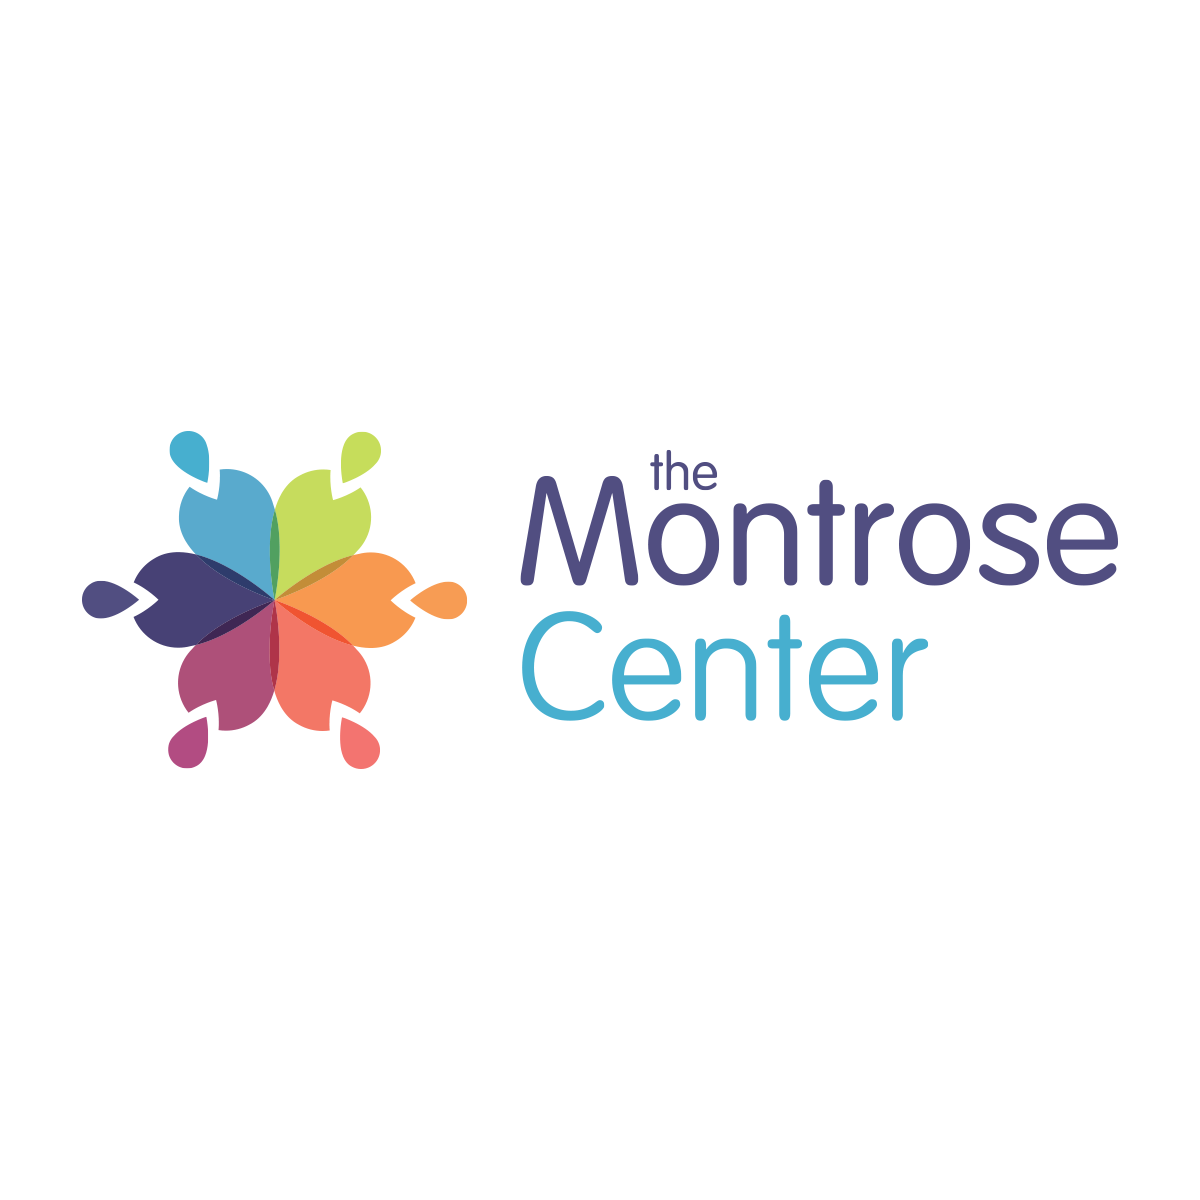 LGBTQ Organization in San Antonio Texas - The Montrose Center